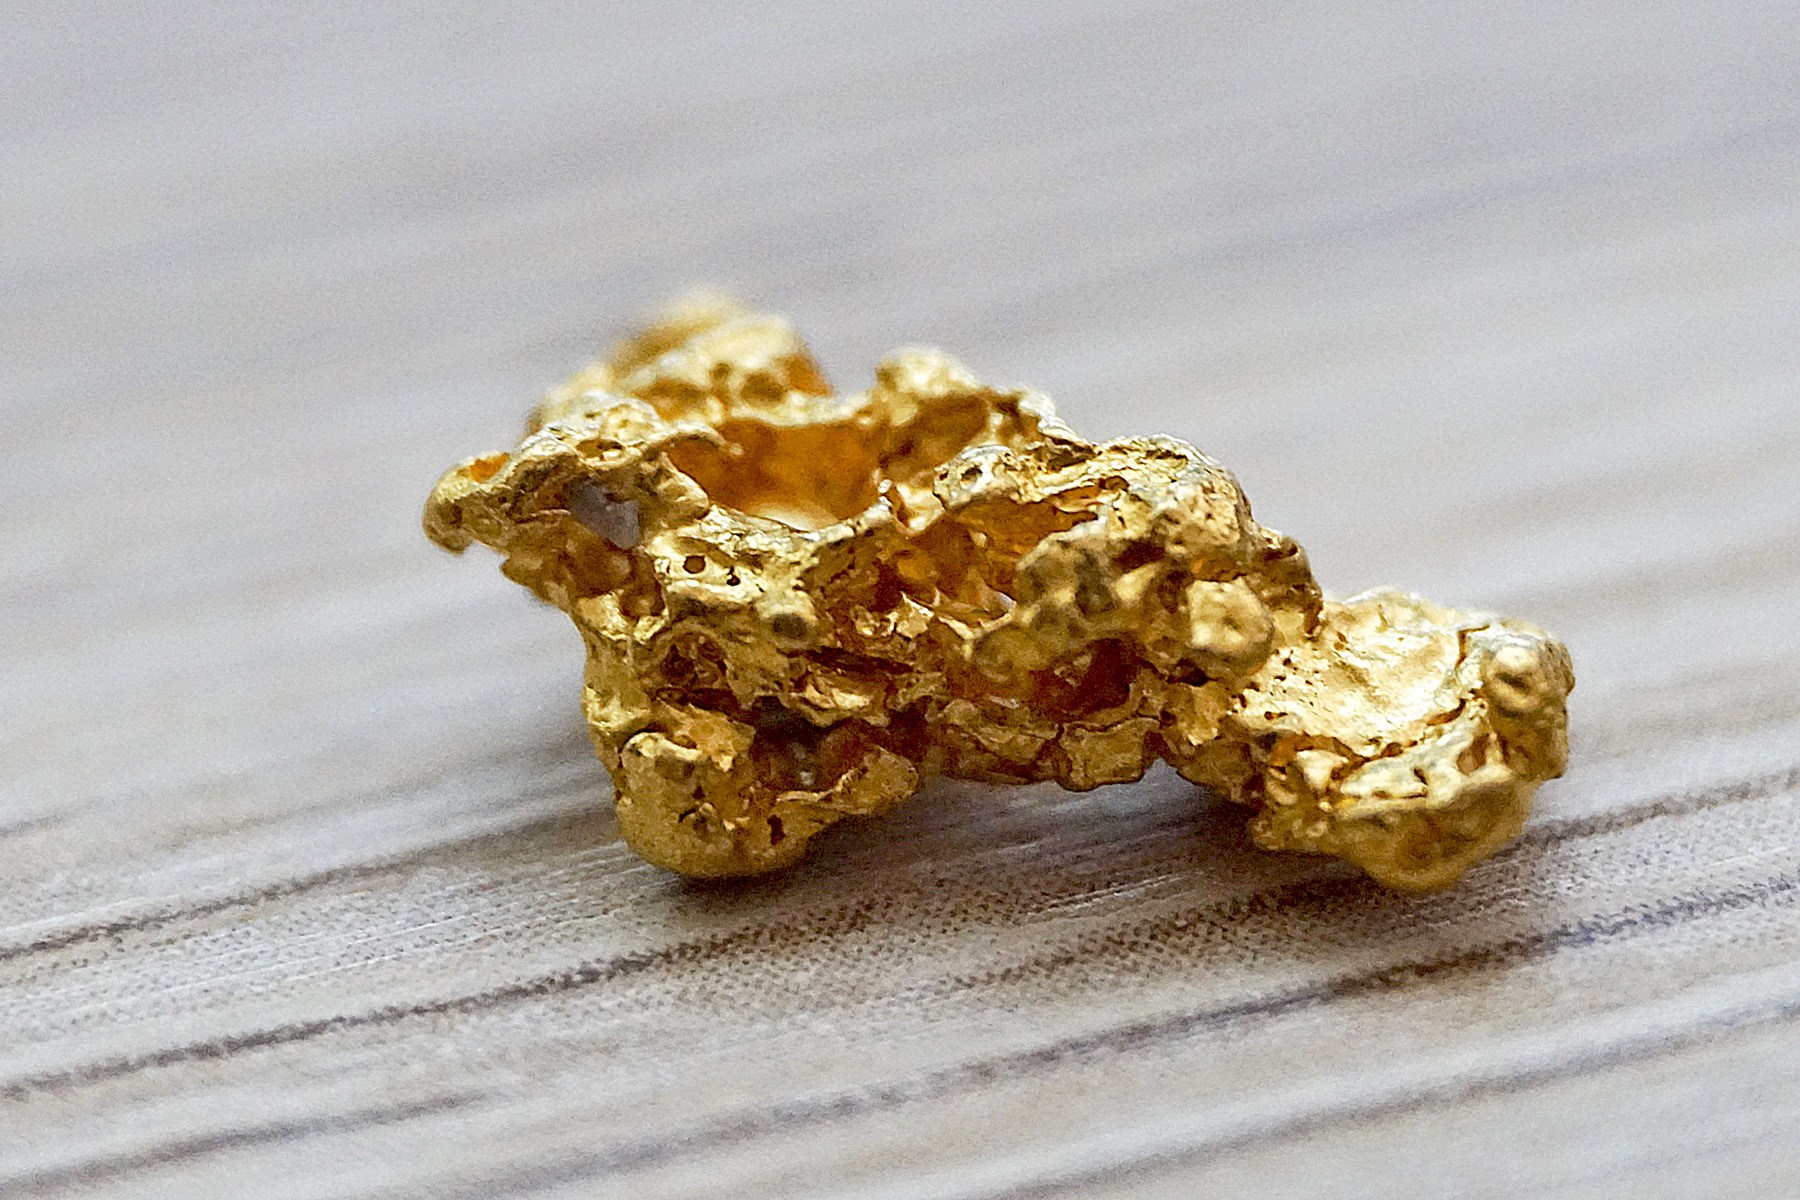 A natural gold nugget